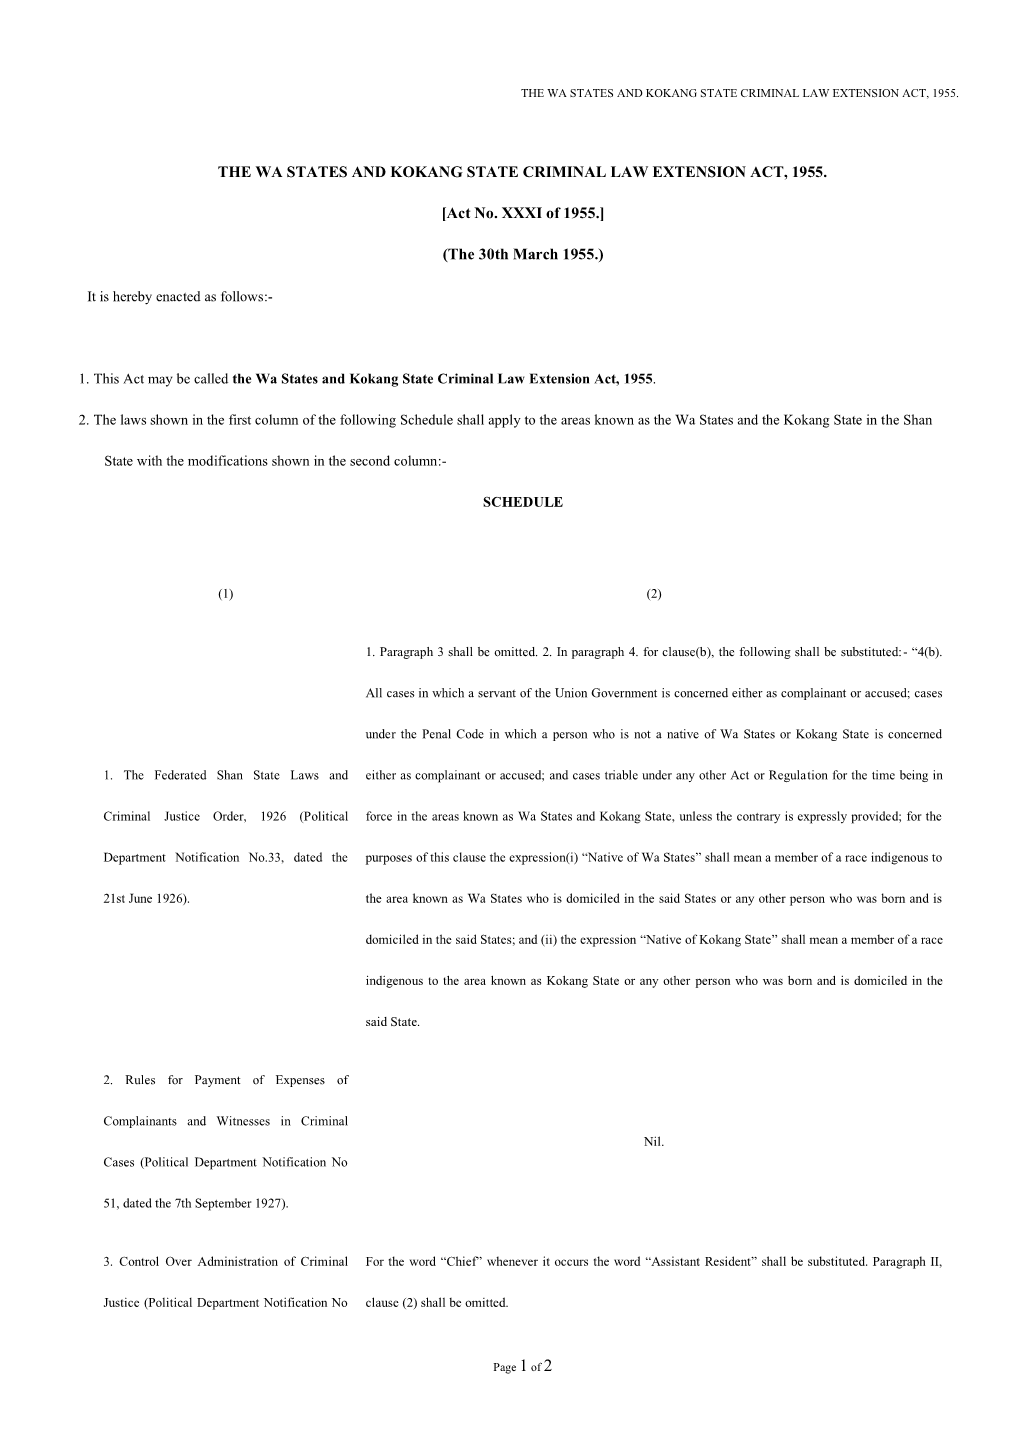 The Wa States and Kokang State Criminal Law Extension Act, 1955